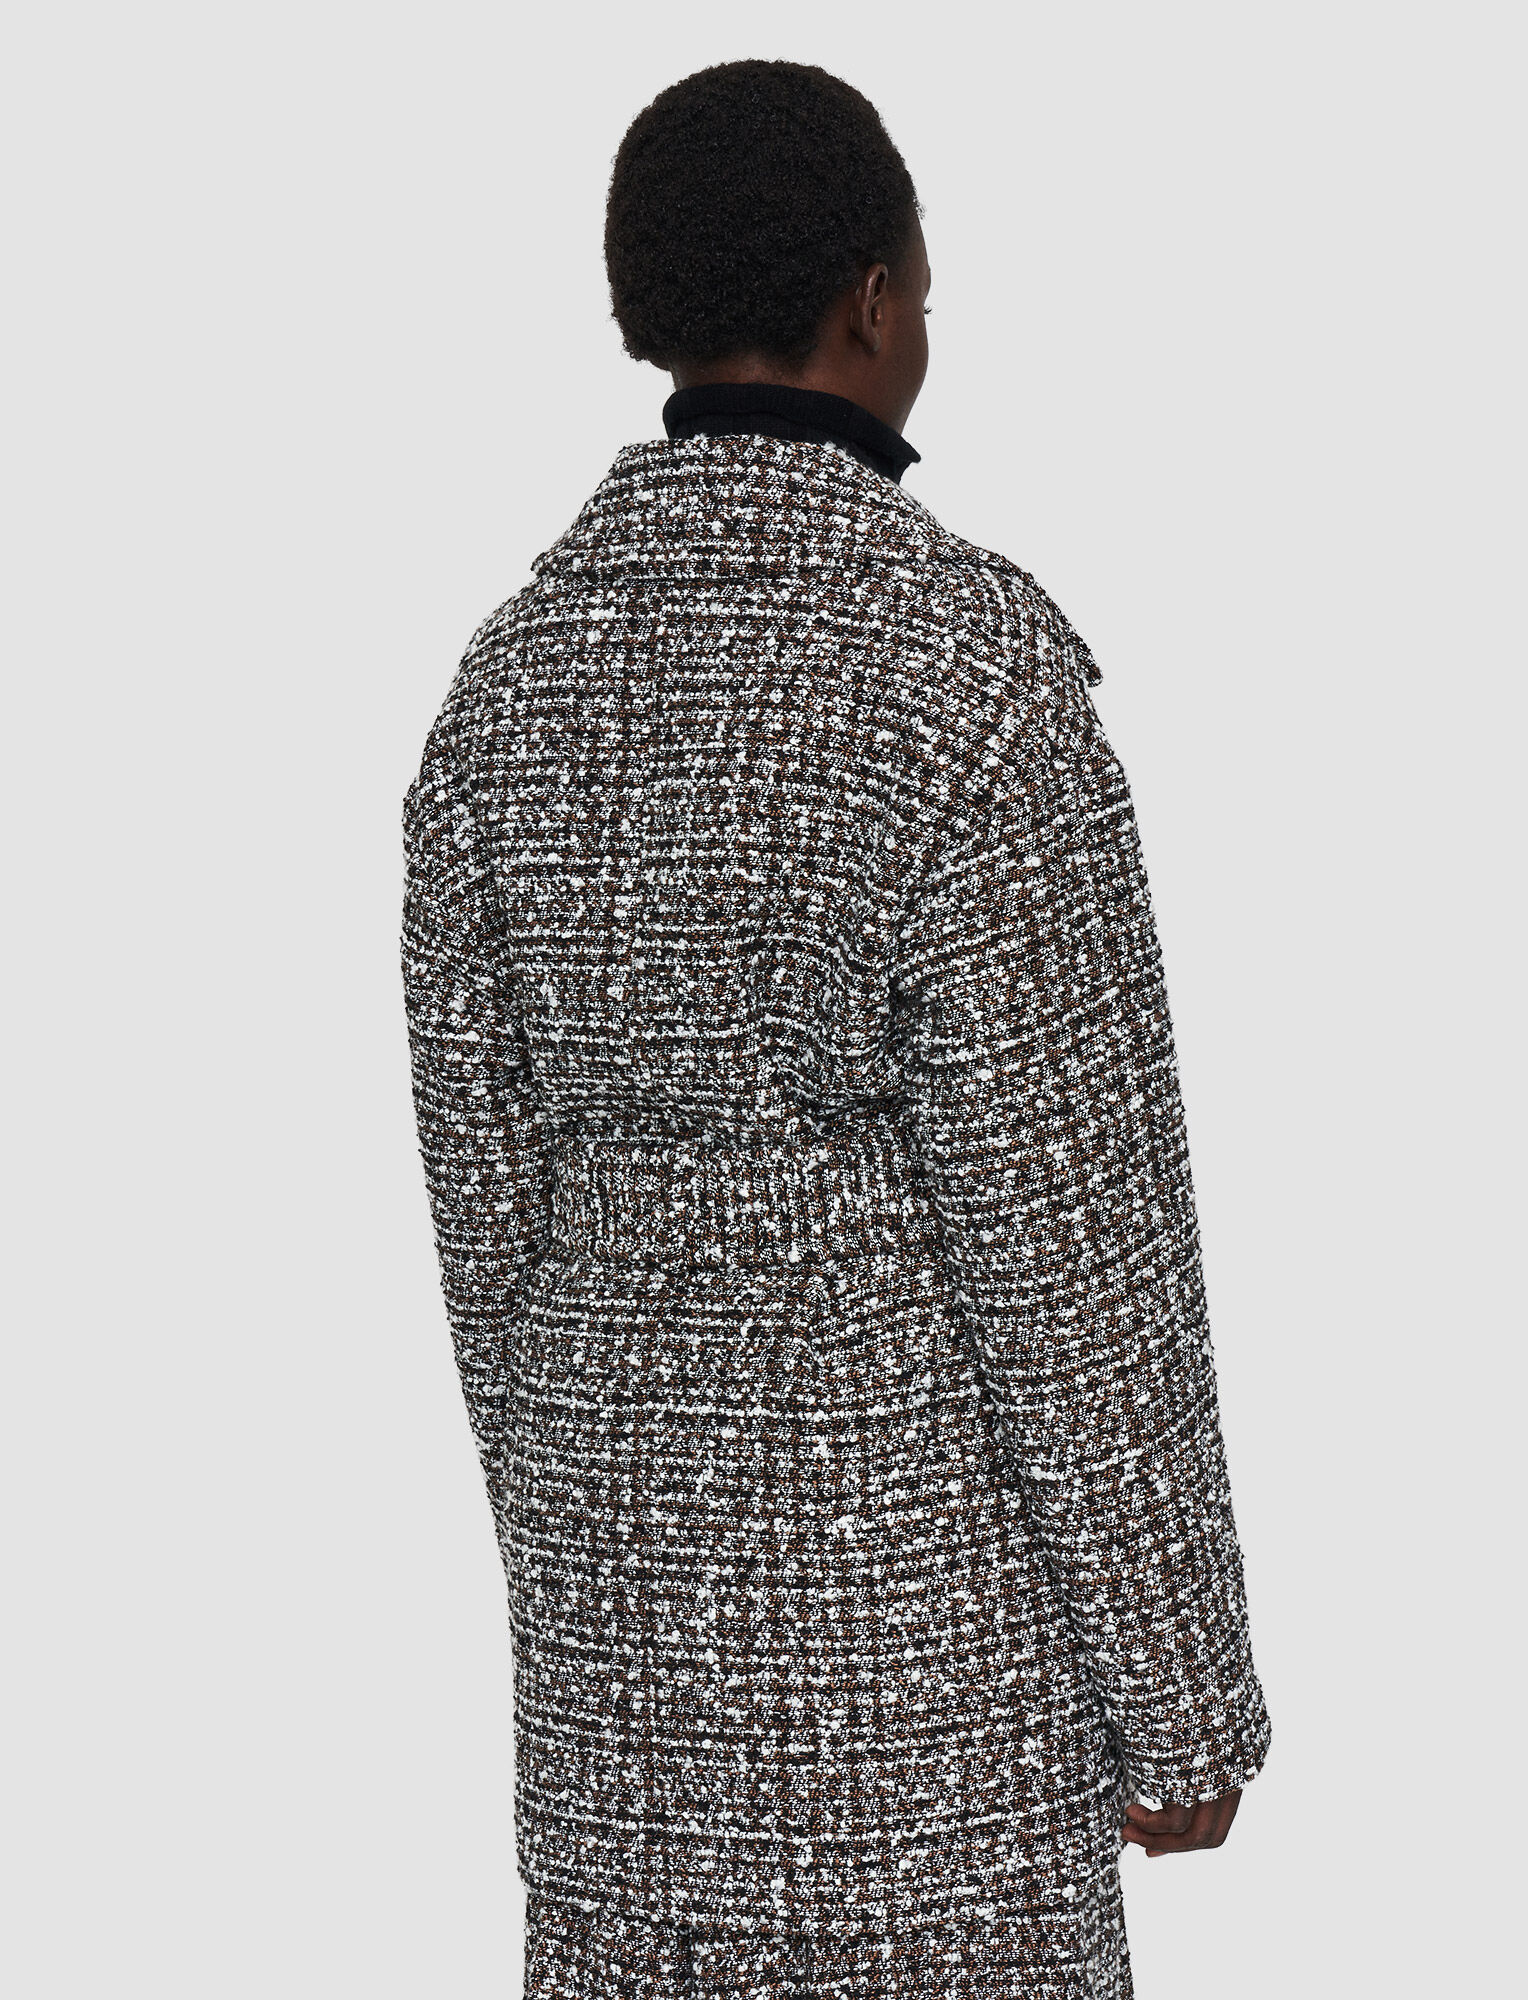 Joseph, Wool Tweed Clery Coat, in Black Combo